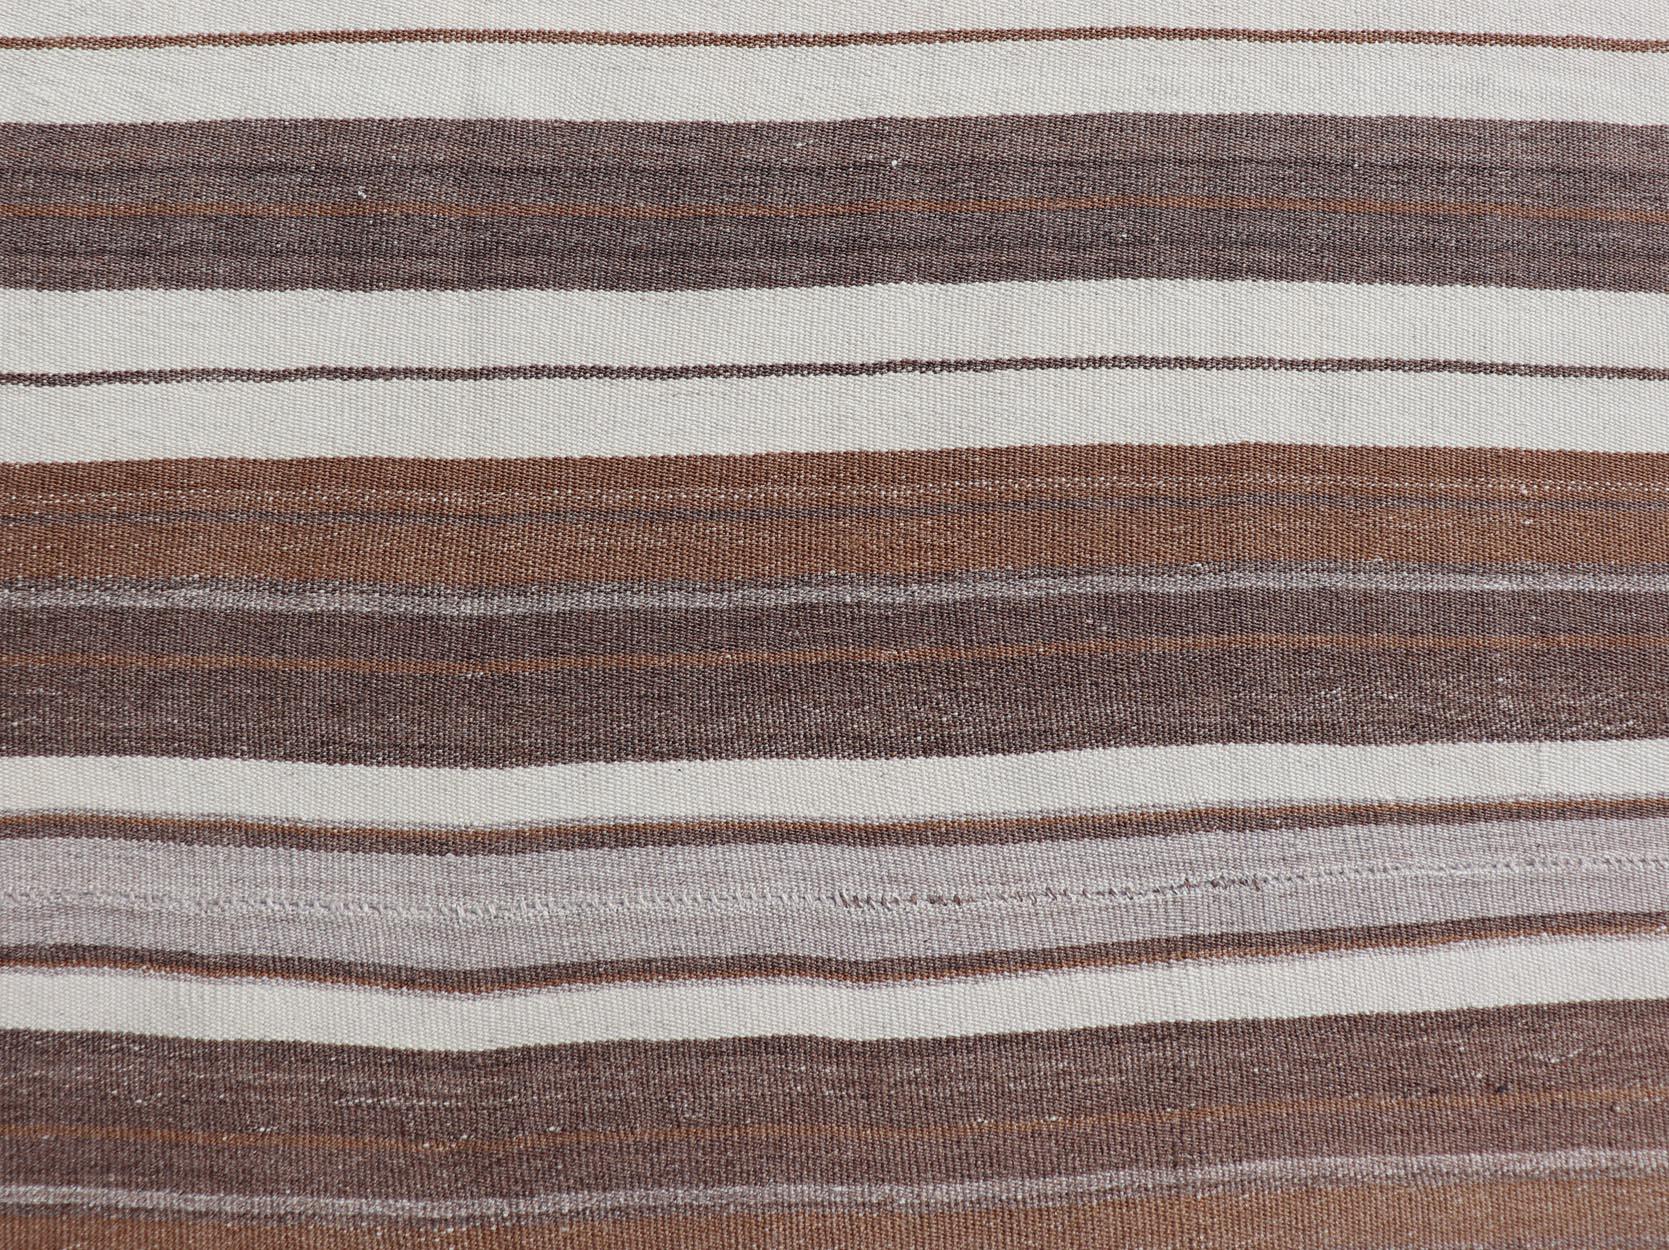 Shades of brown, cognac, tan, and ivory vintage Kilim from Turkey with Minimalist design in stripes. Keivan Woven Arts / rug EN-178651, country of origin / type: Turkey / Kilim, circa 1950

Measures: 4'4 x 6'0.